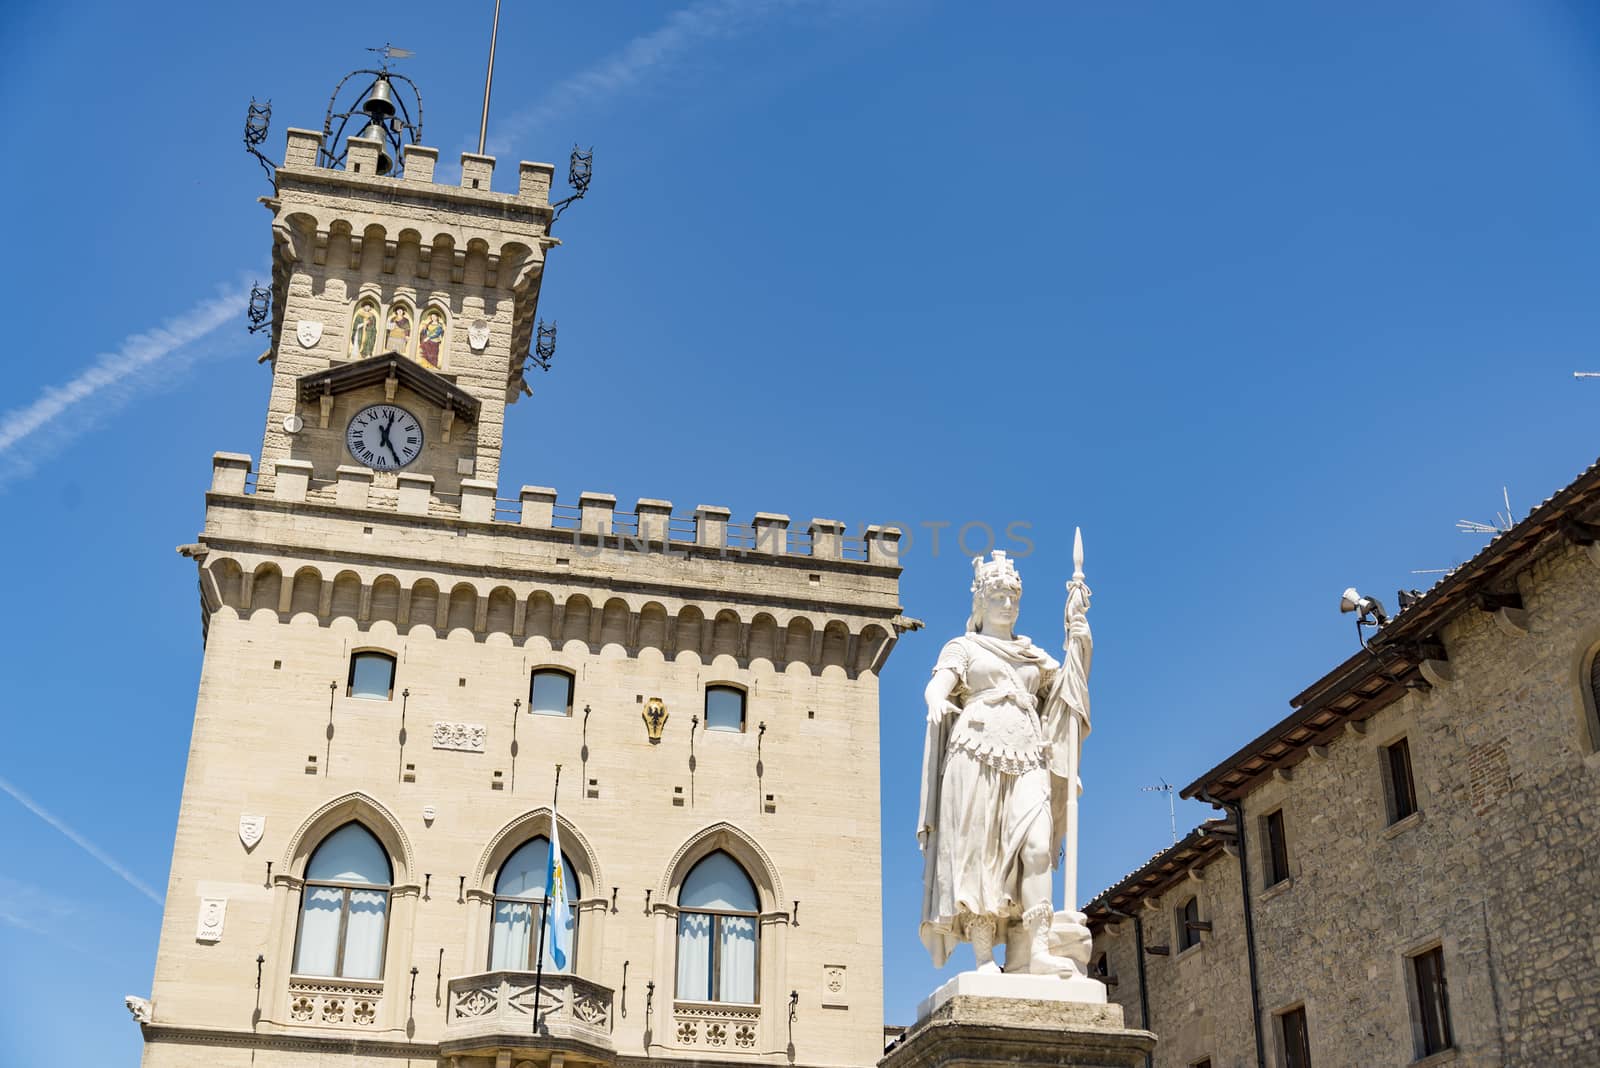 San Marino Public Palace and statue of Liberty by edella